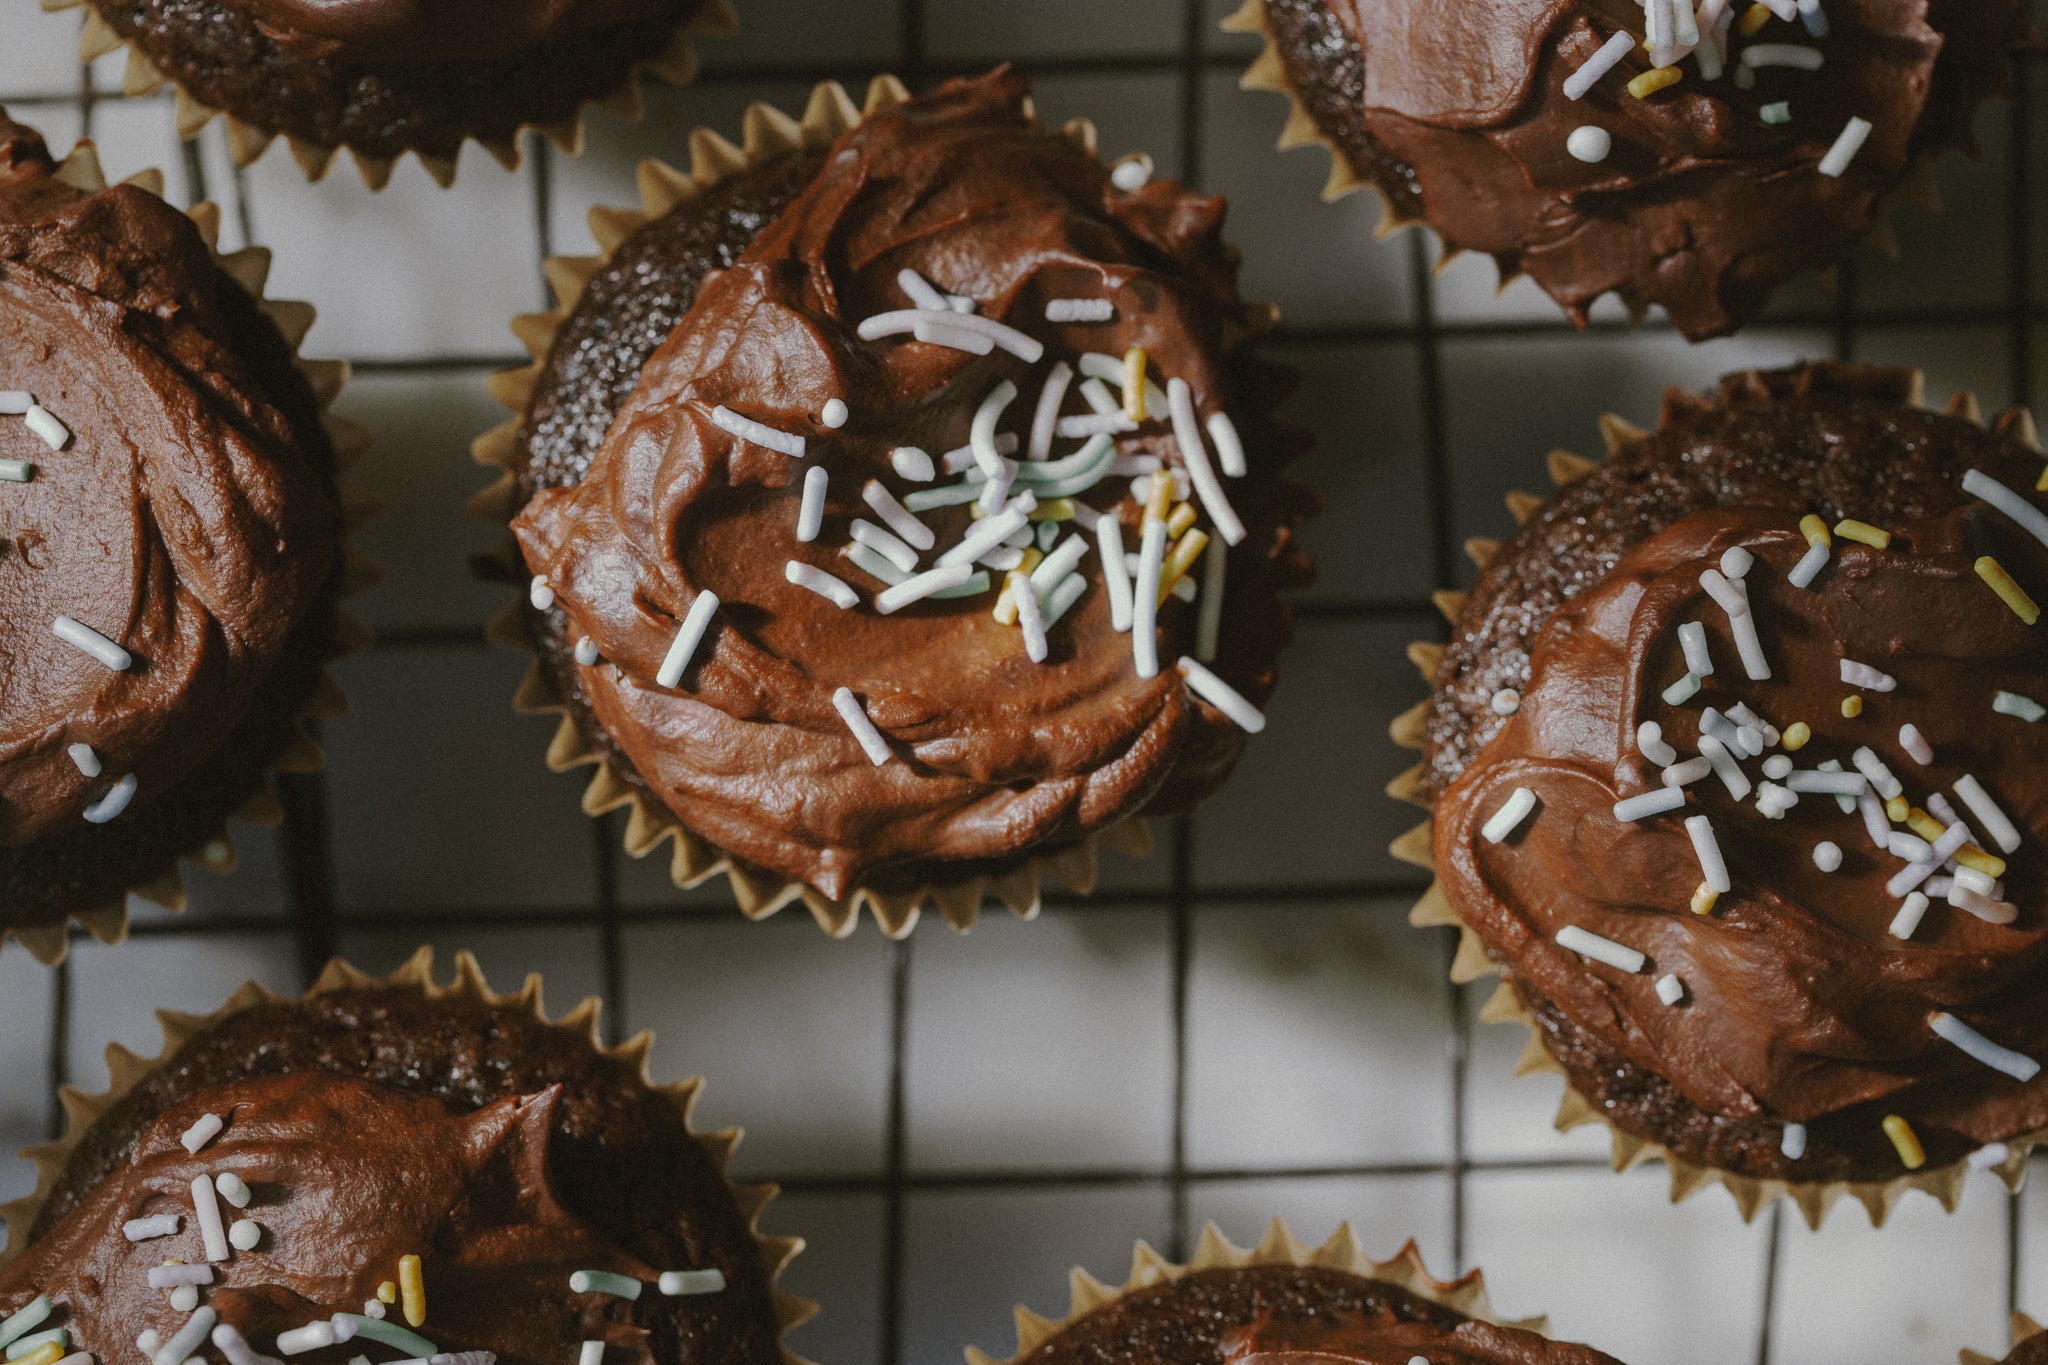 Chocolate Cupcakes with Chocolate Ganache